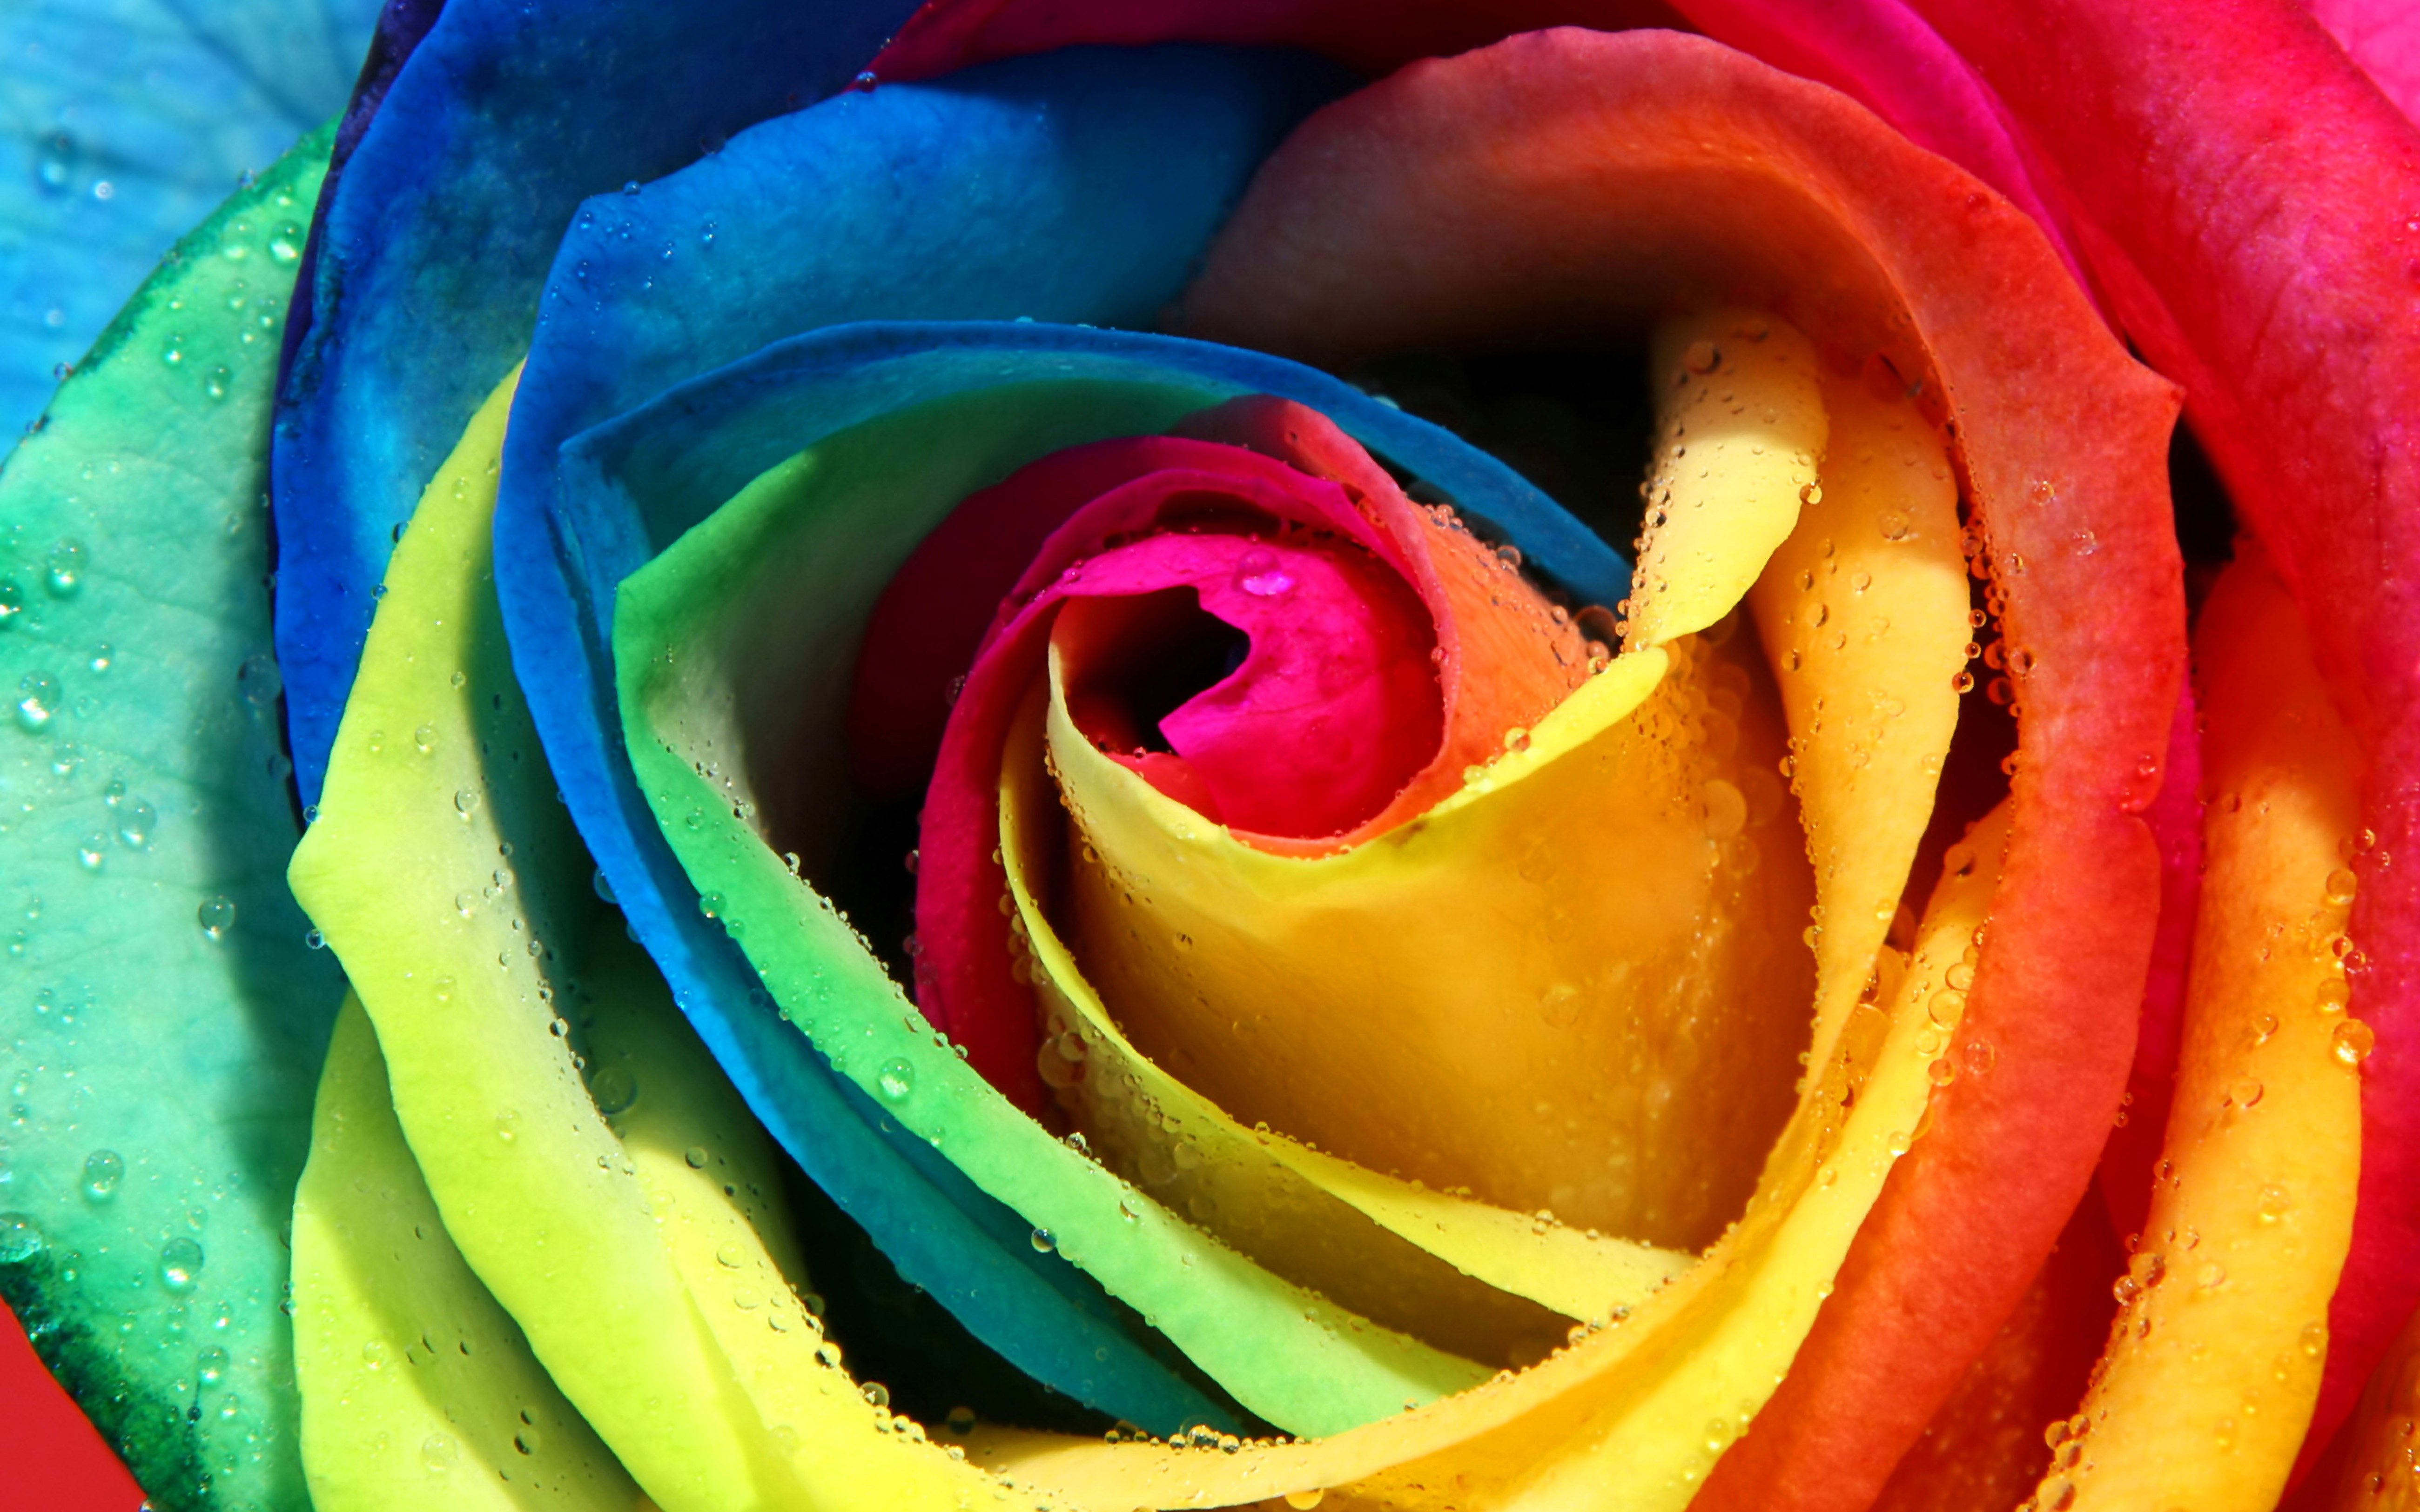 Rose colorful rainbow petals bud dew wallpaper   ForWallpapercom